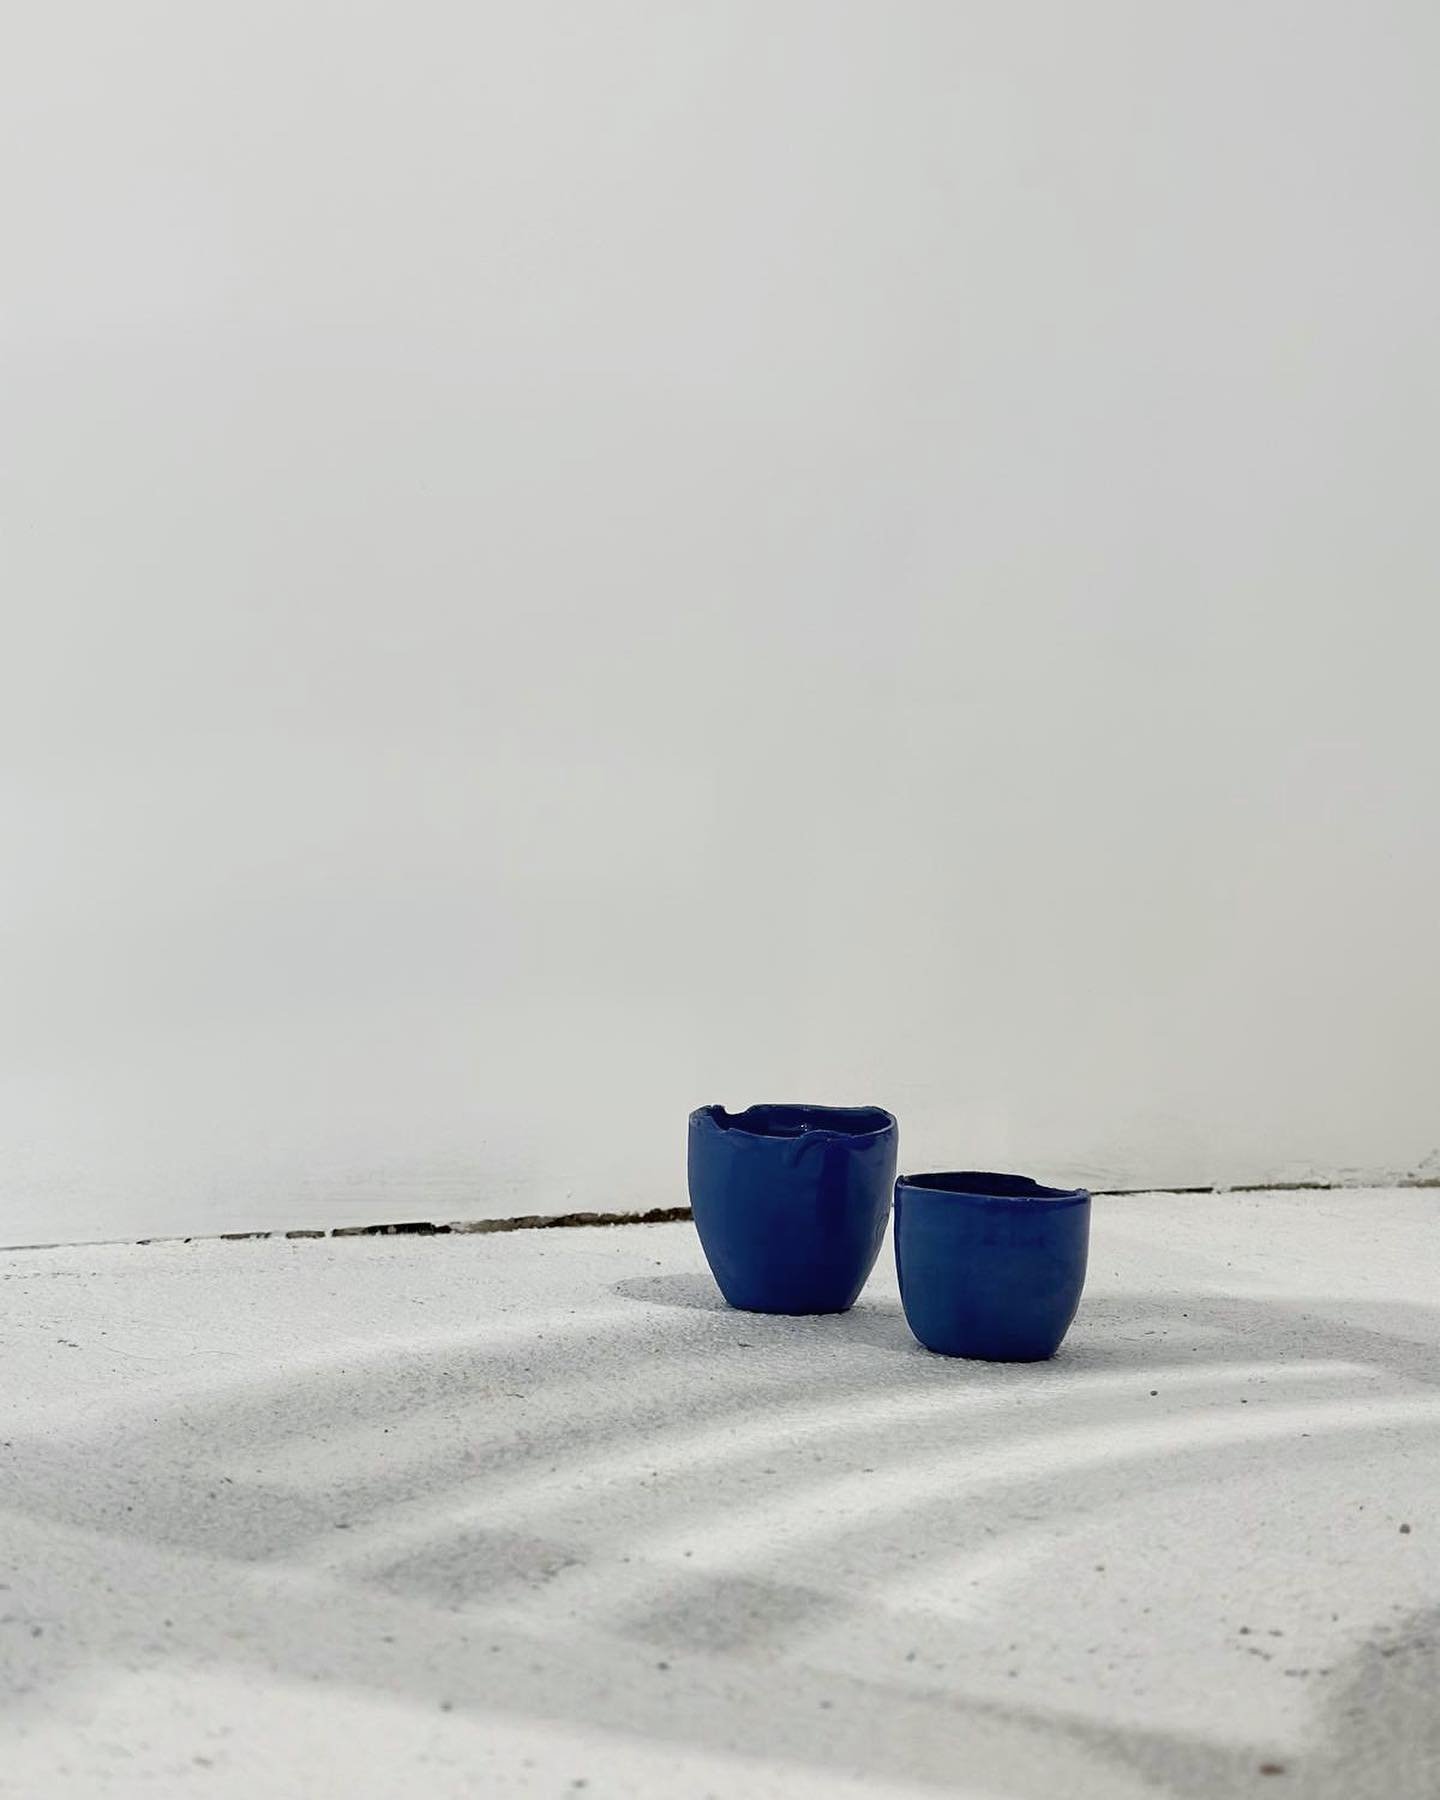 Blue cups, porcelaine.
By @sandrine.rossit 📷🤍
.
.
.
#ceramics #ceramique #reconsider #poterie #porcelaine